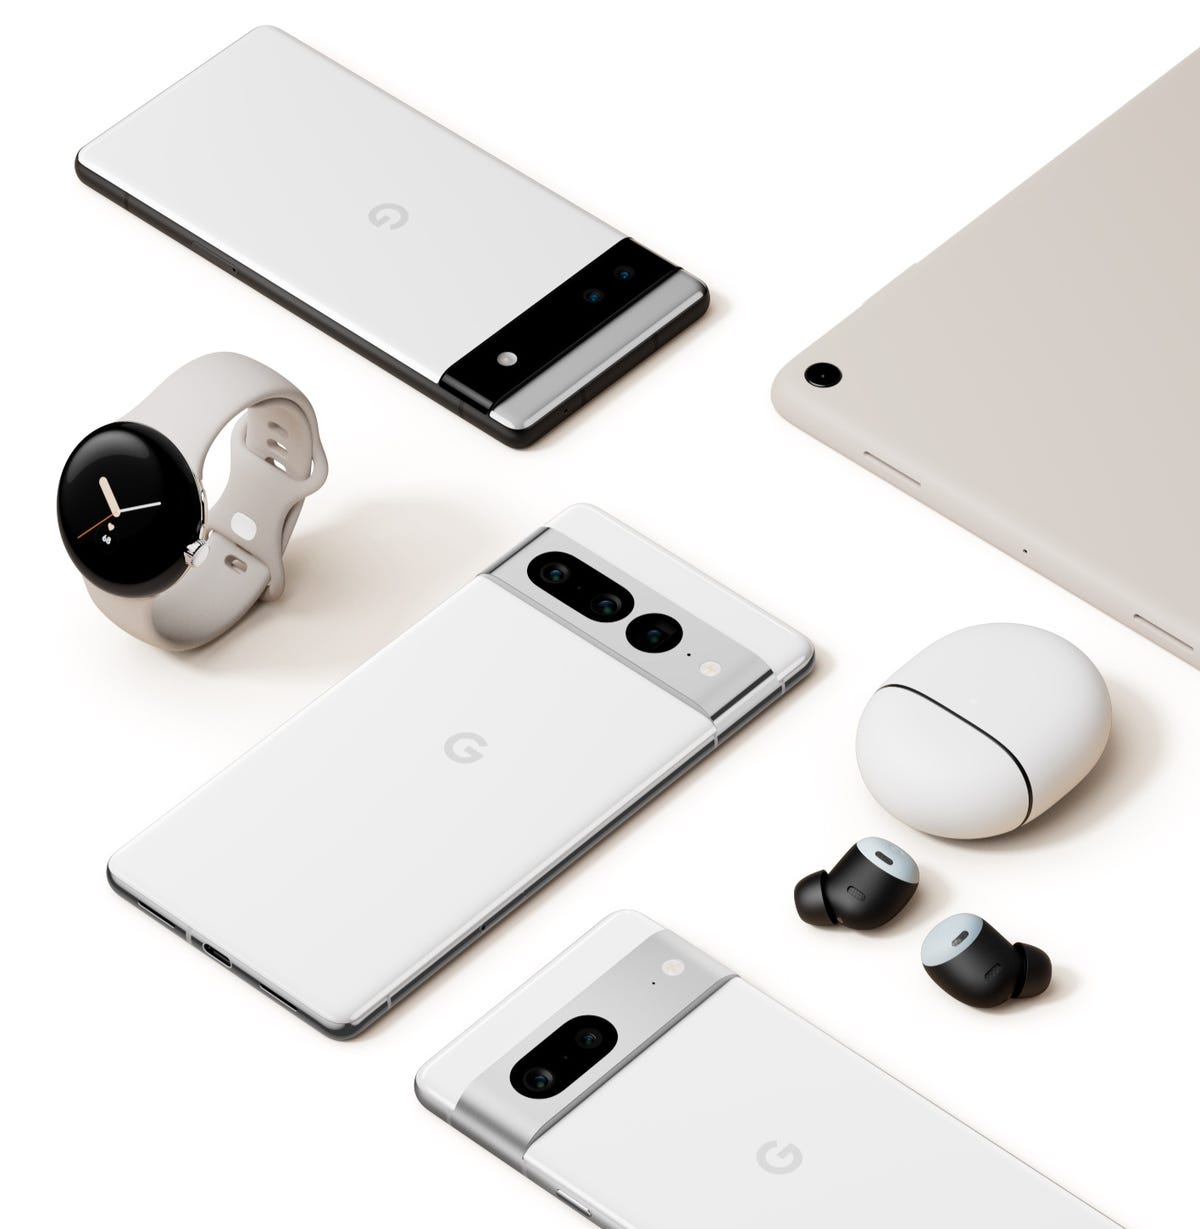 Google's 2022 hardware lineup: Pixel 6A, Pixel 7, Google Buds Pro, Pixel Watch